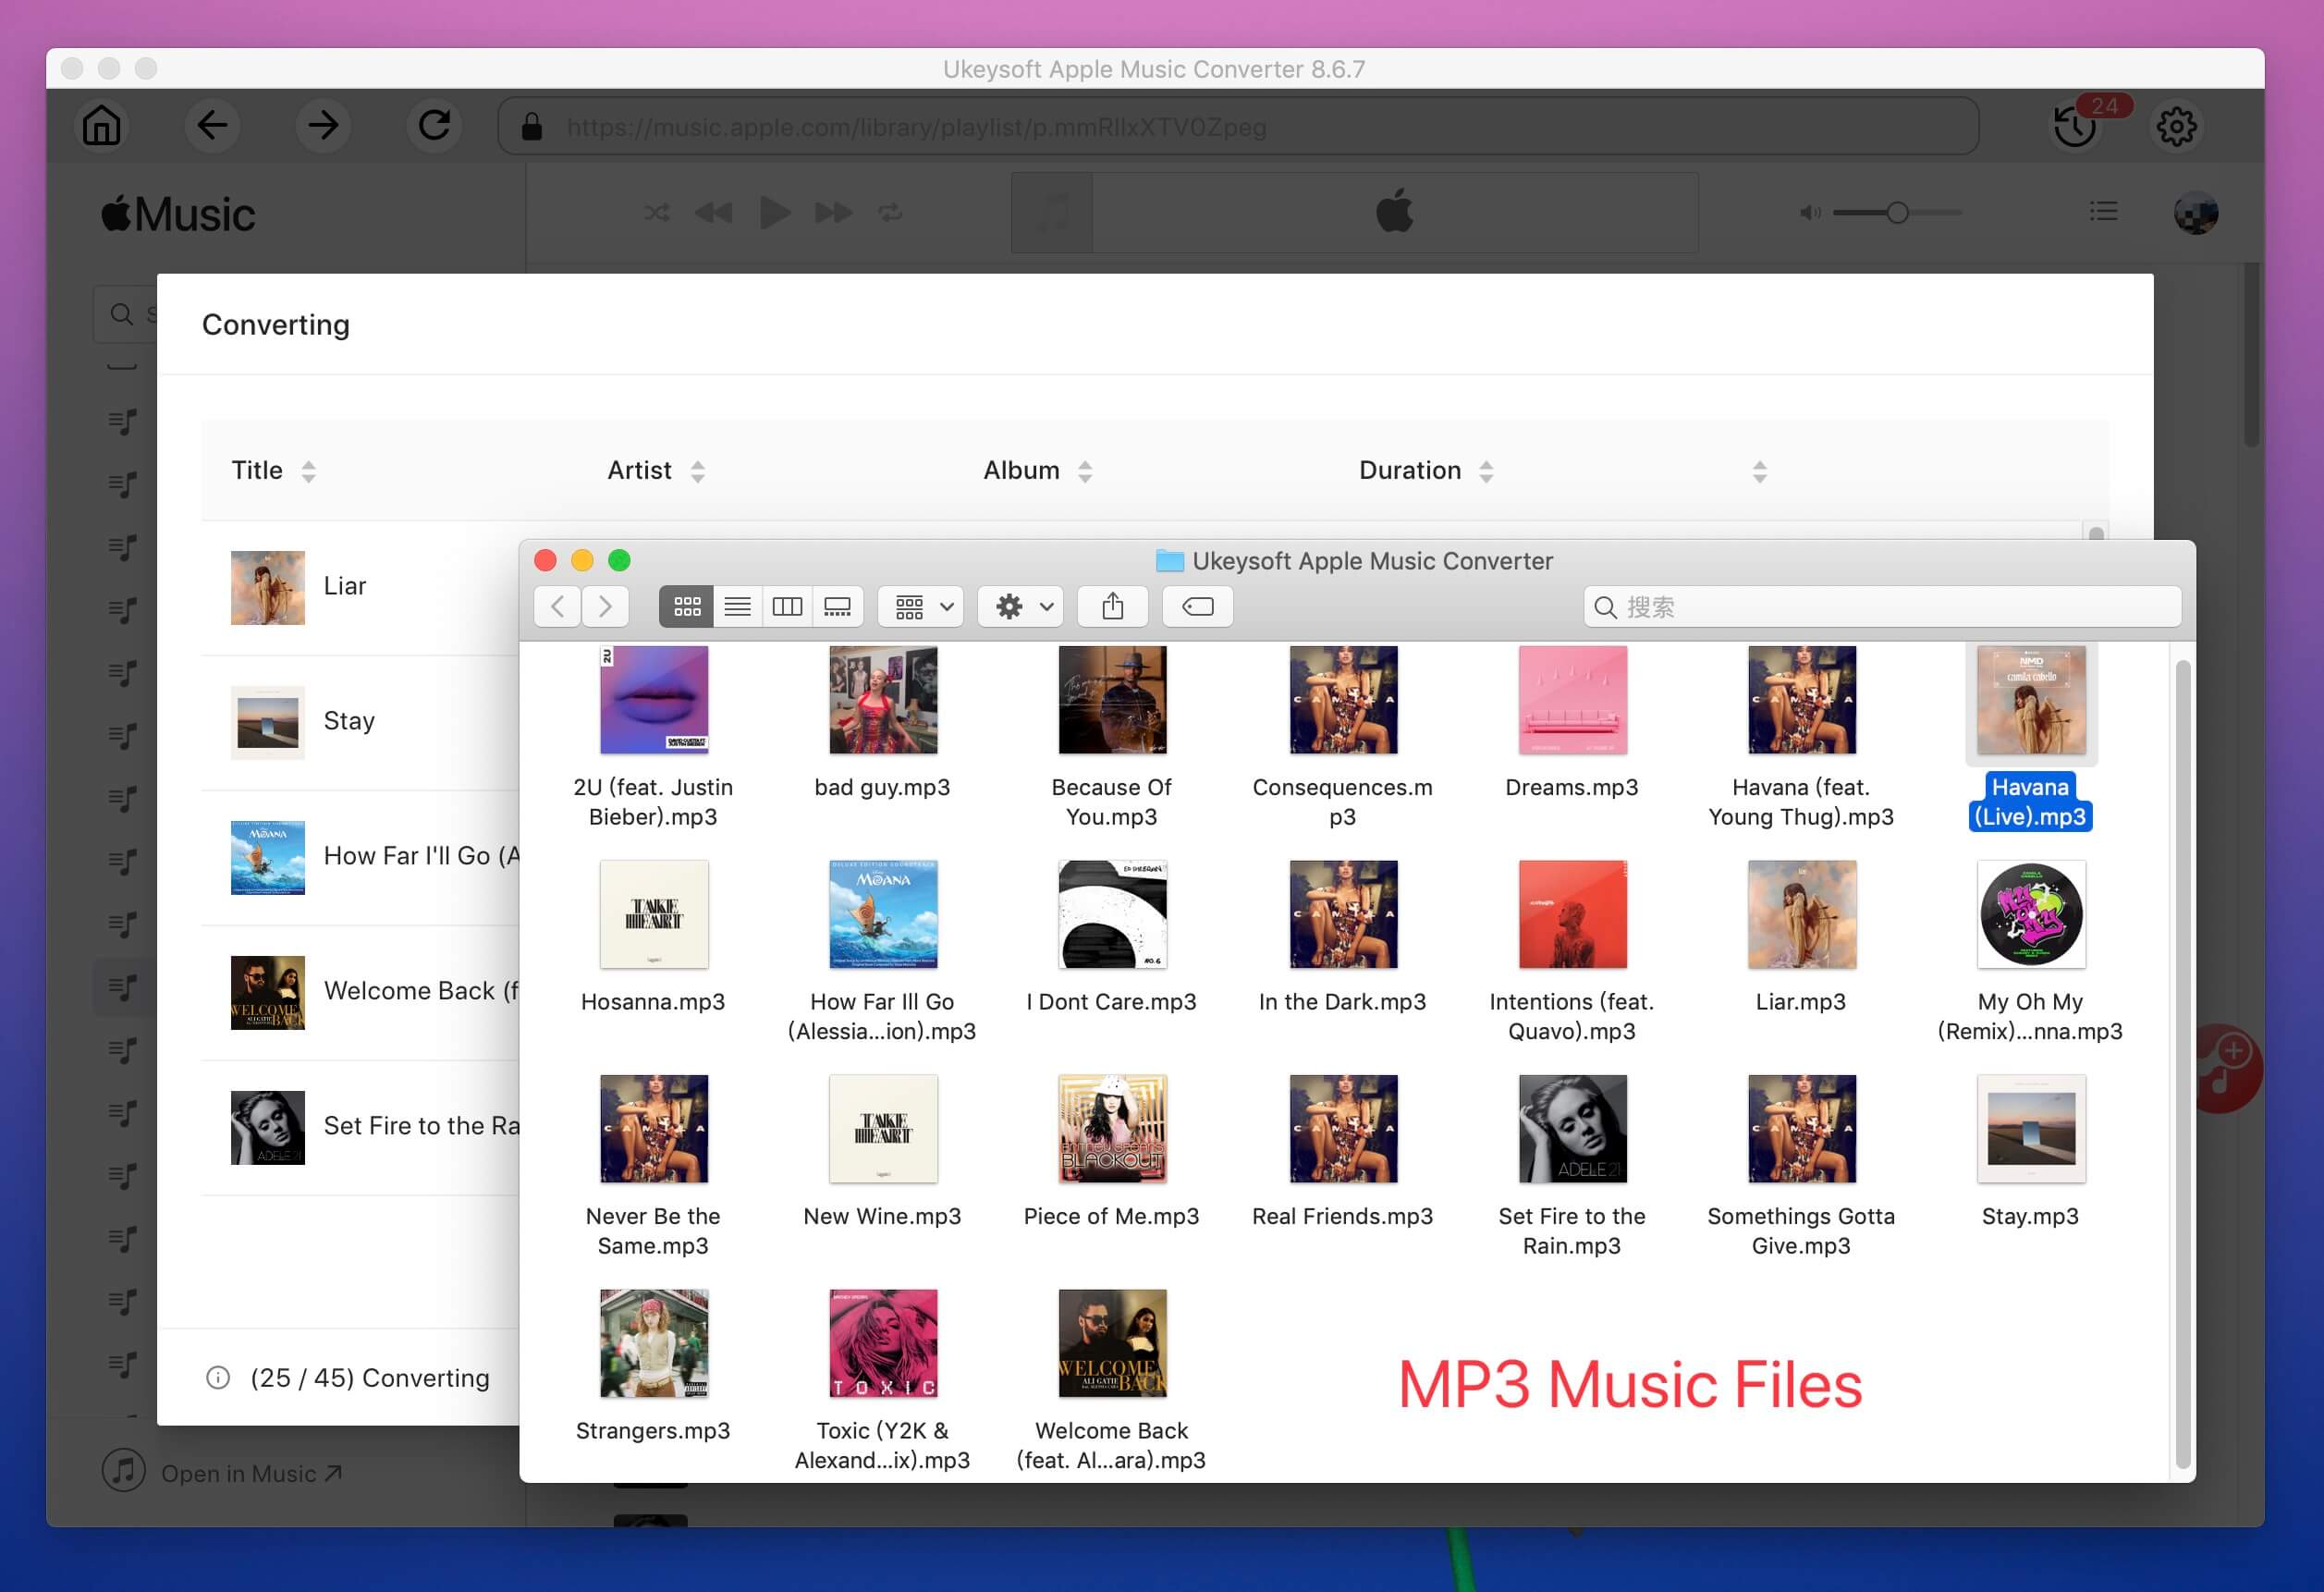 apple music playlist MP3 files